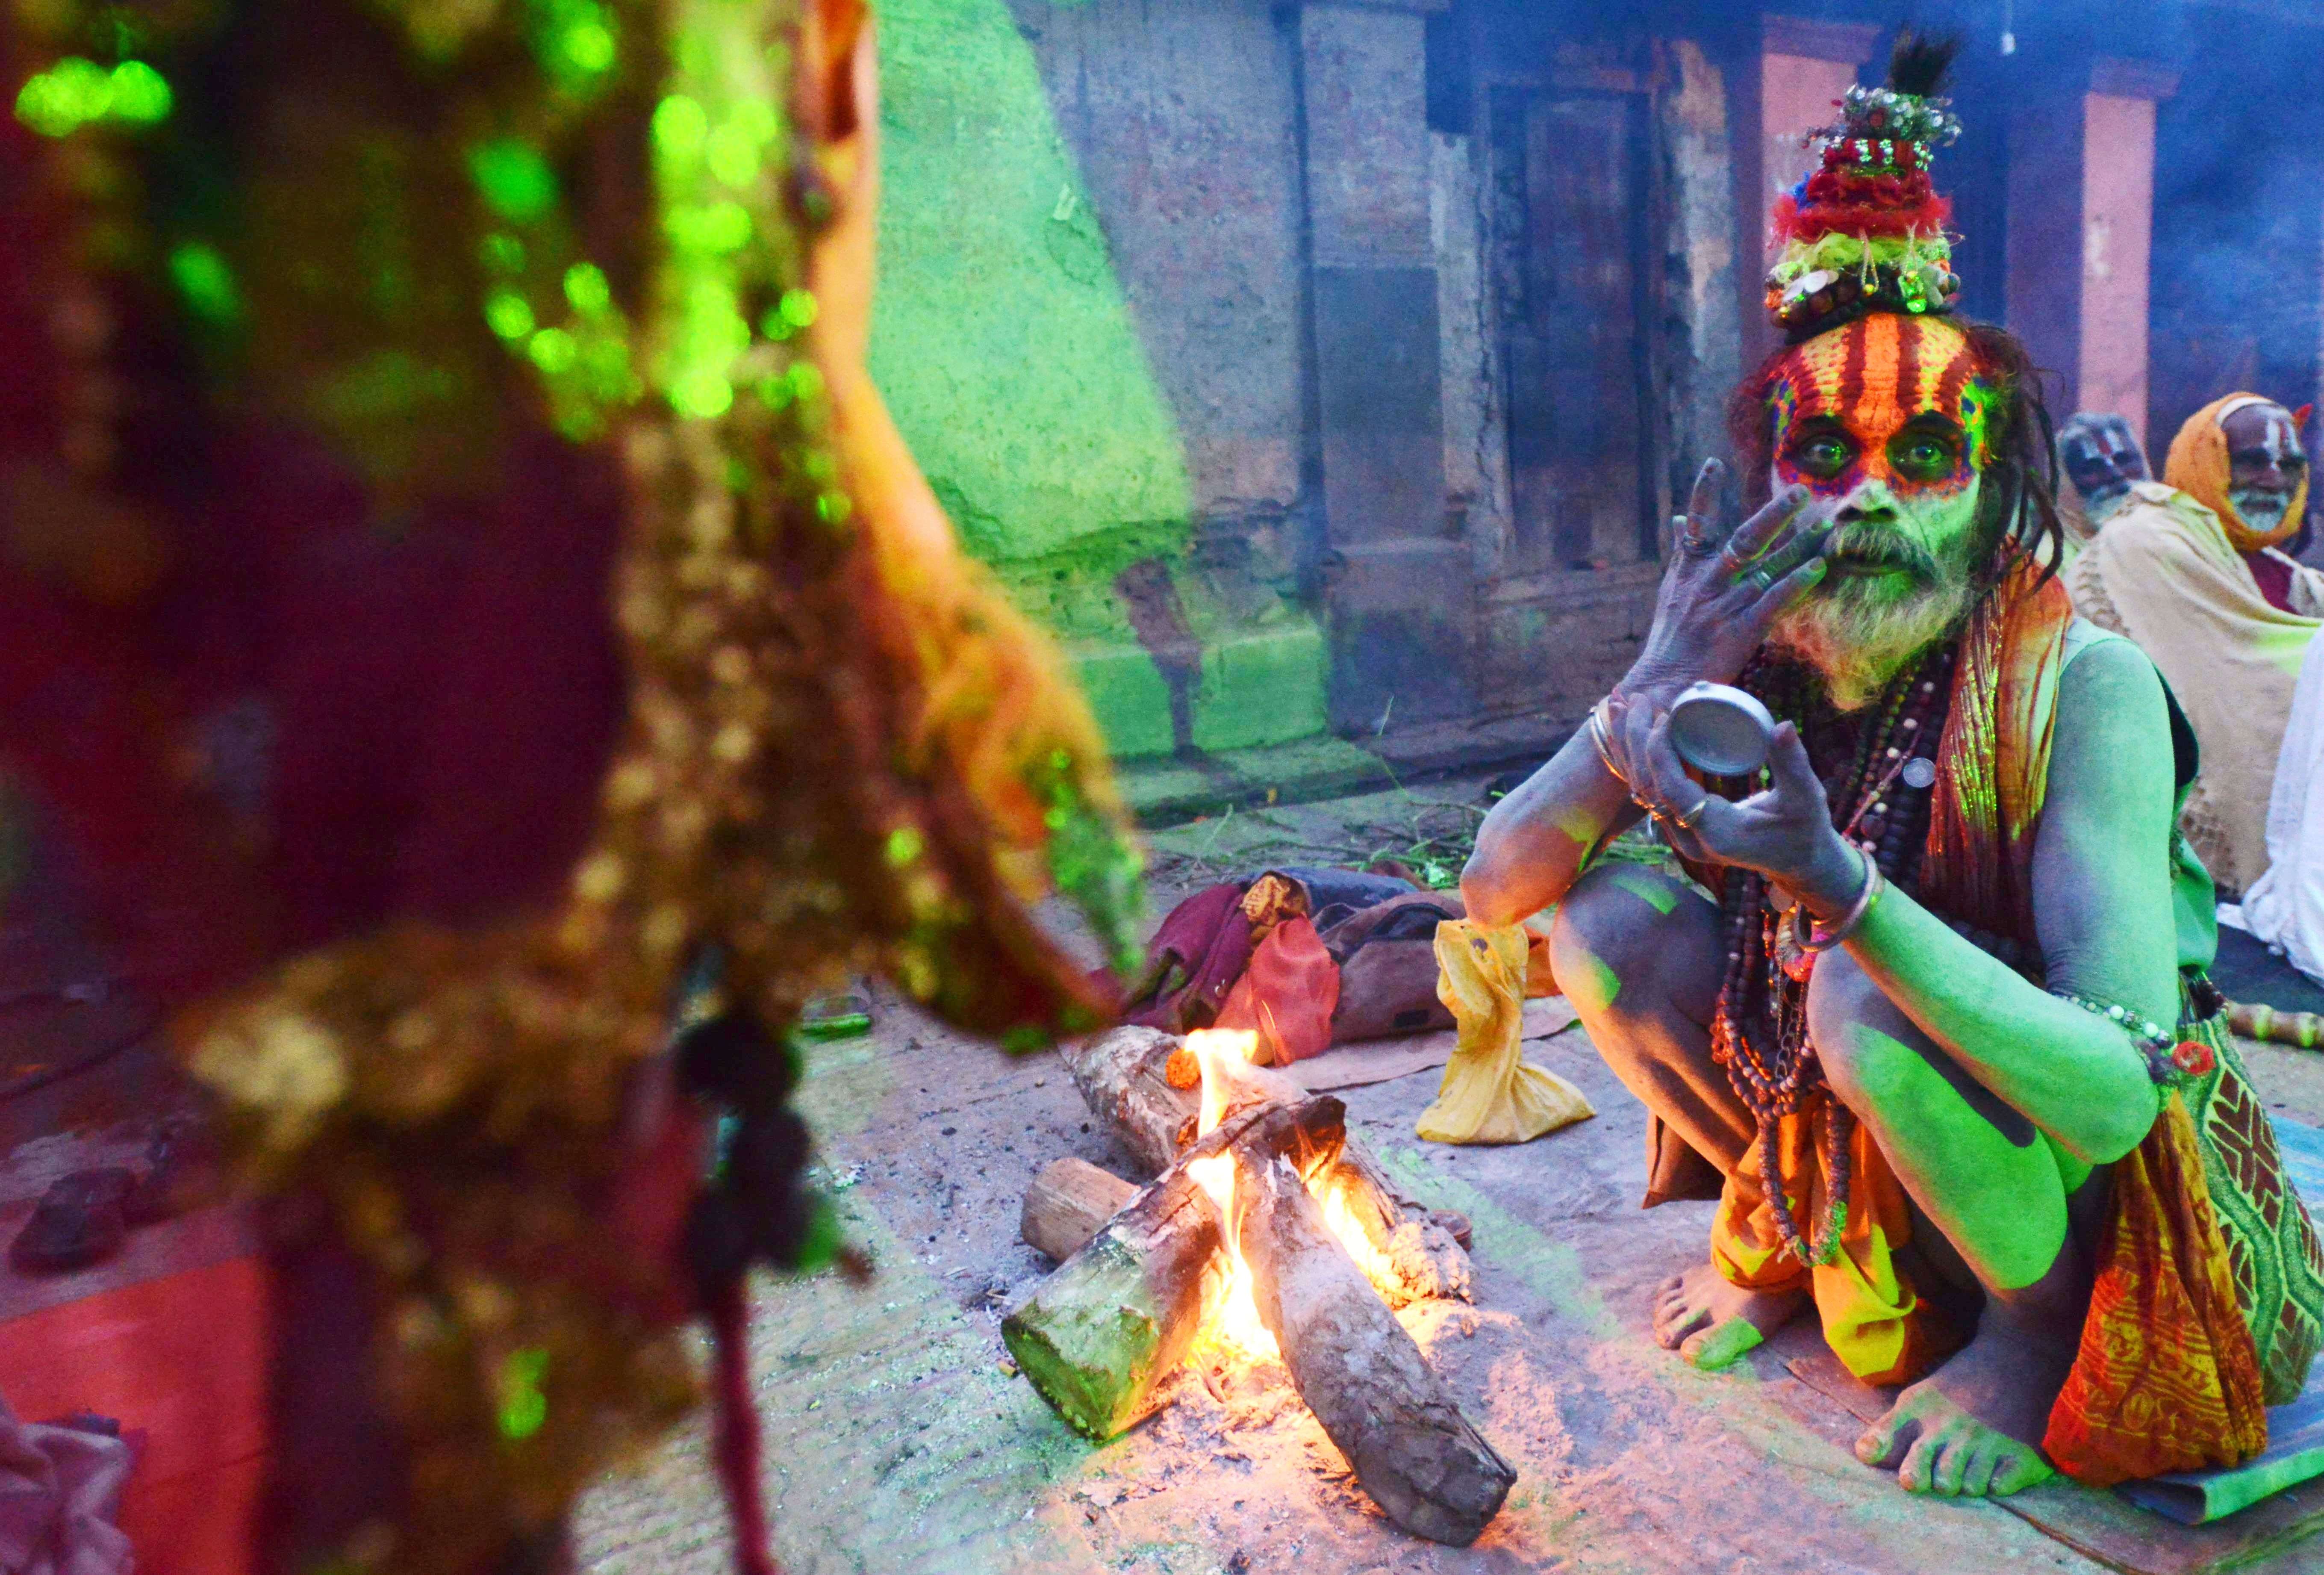 A sadhu paints coloured paste onto his face during the Maha Shivaratri festival in Kathmandu. (AFP PHOTO / PRAKASH MATHEMA)